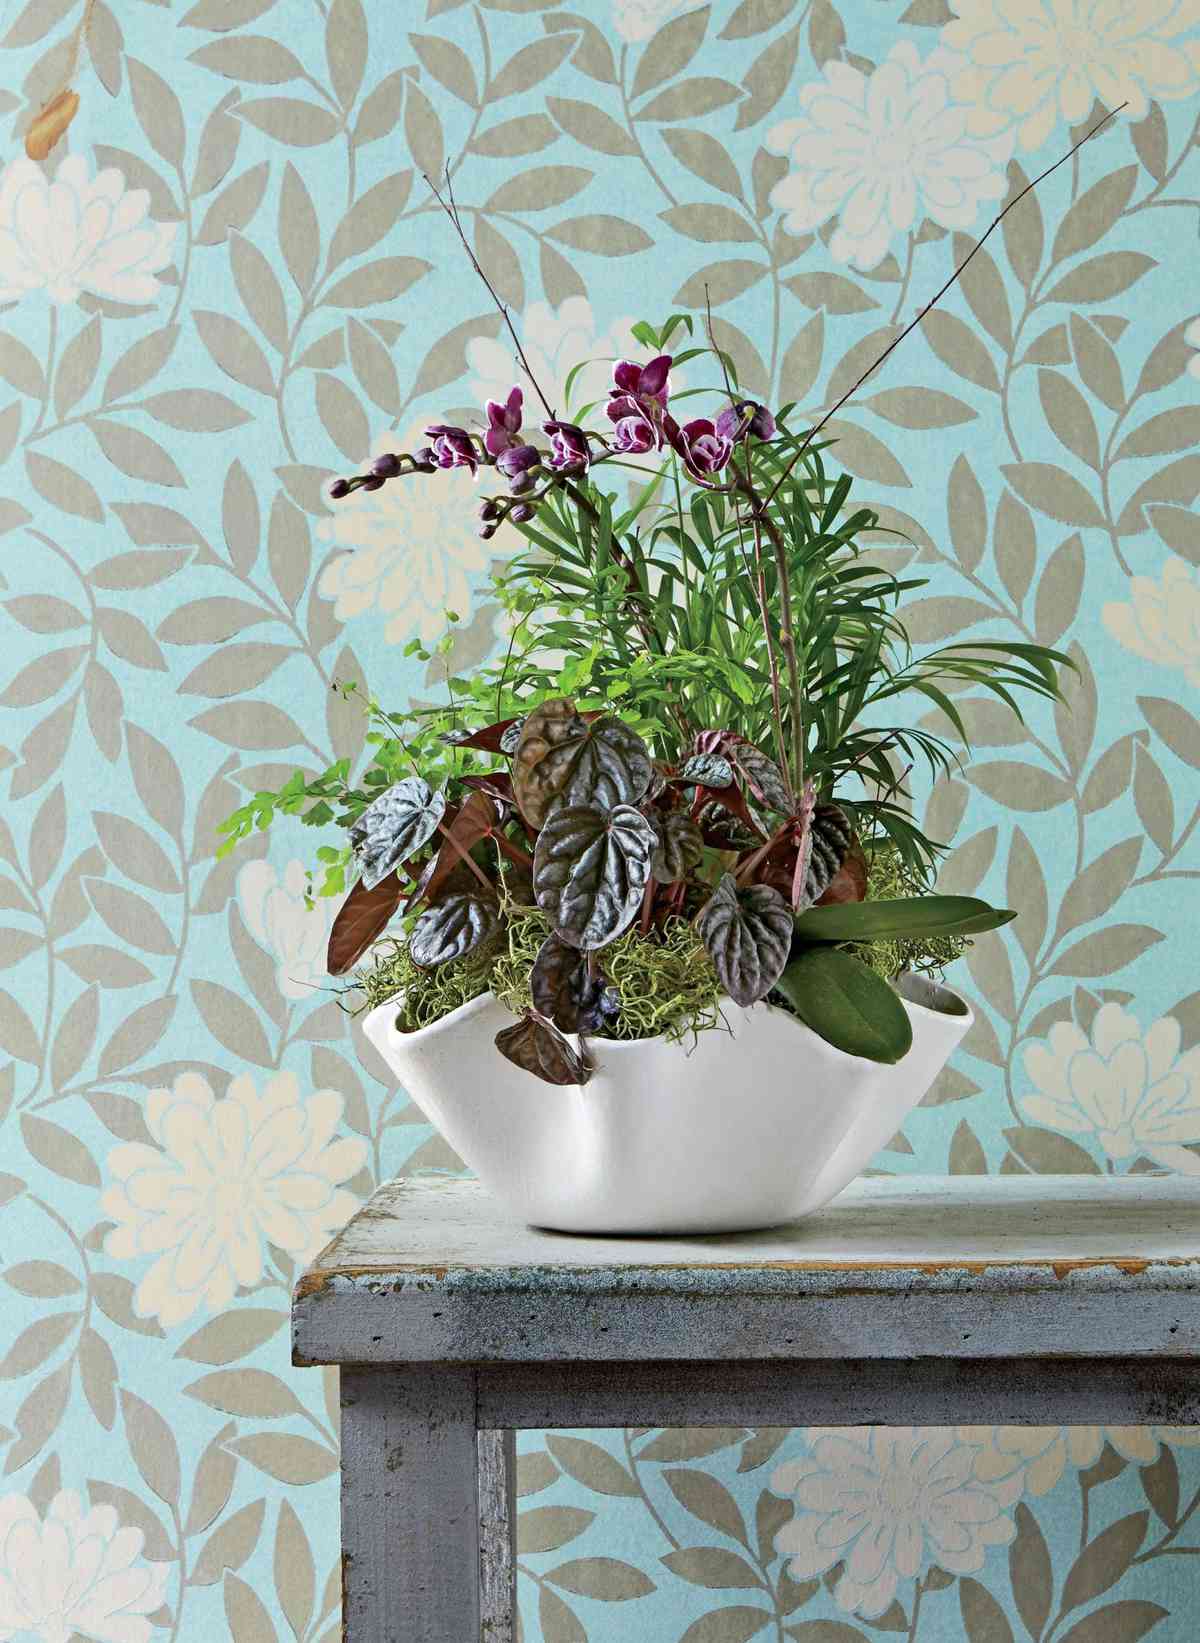 Better-way Ceramic Planter Modern Flower Pot Succulent Plant Container Decorative Indoor Pots 6 Pack Heart Rectangle